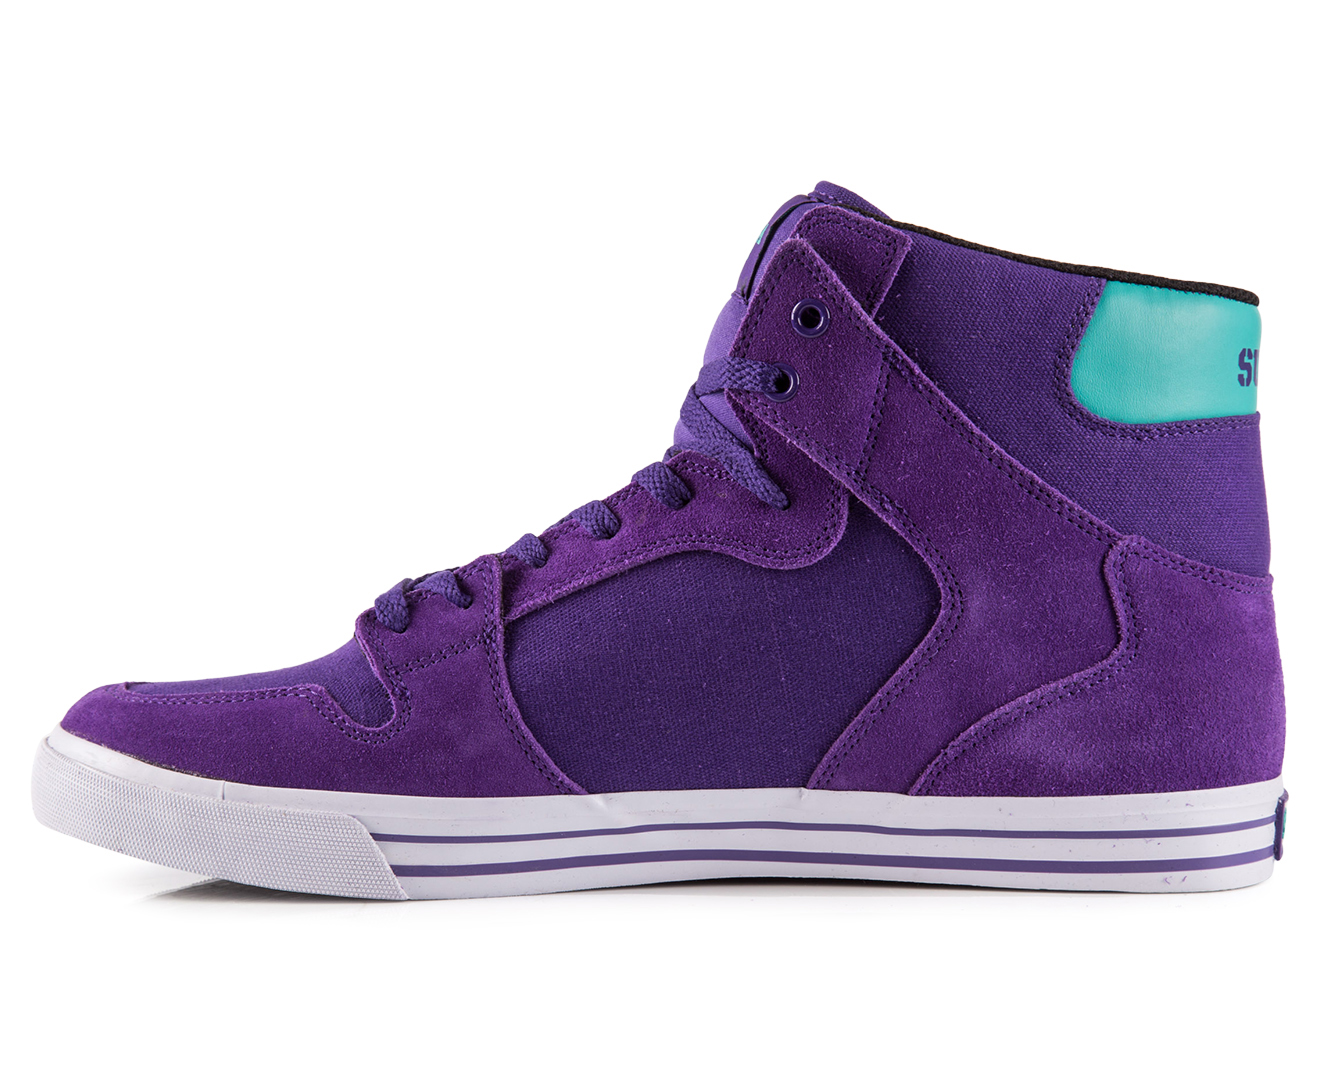 SUPRA Men's Vaider Shoes - Purple/Teal/White | Catch.com.au